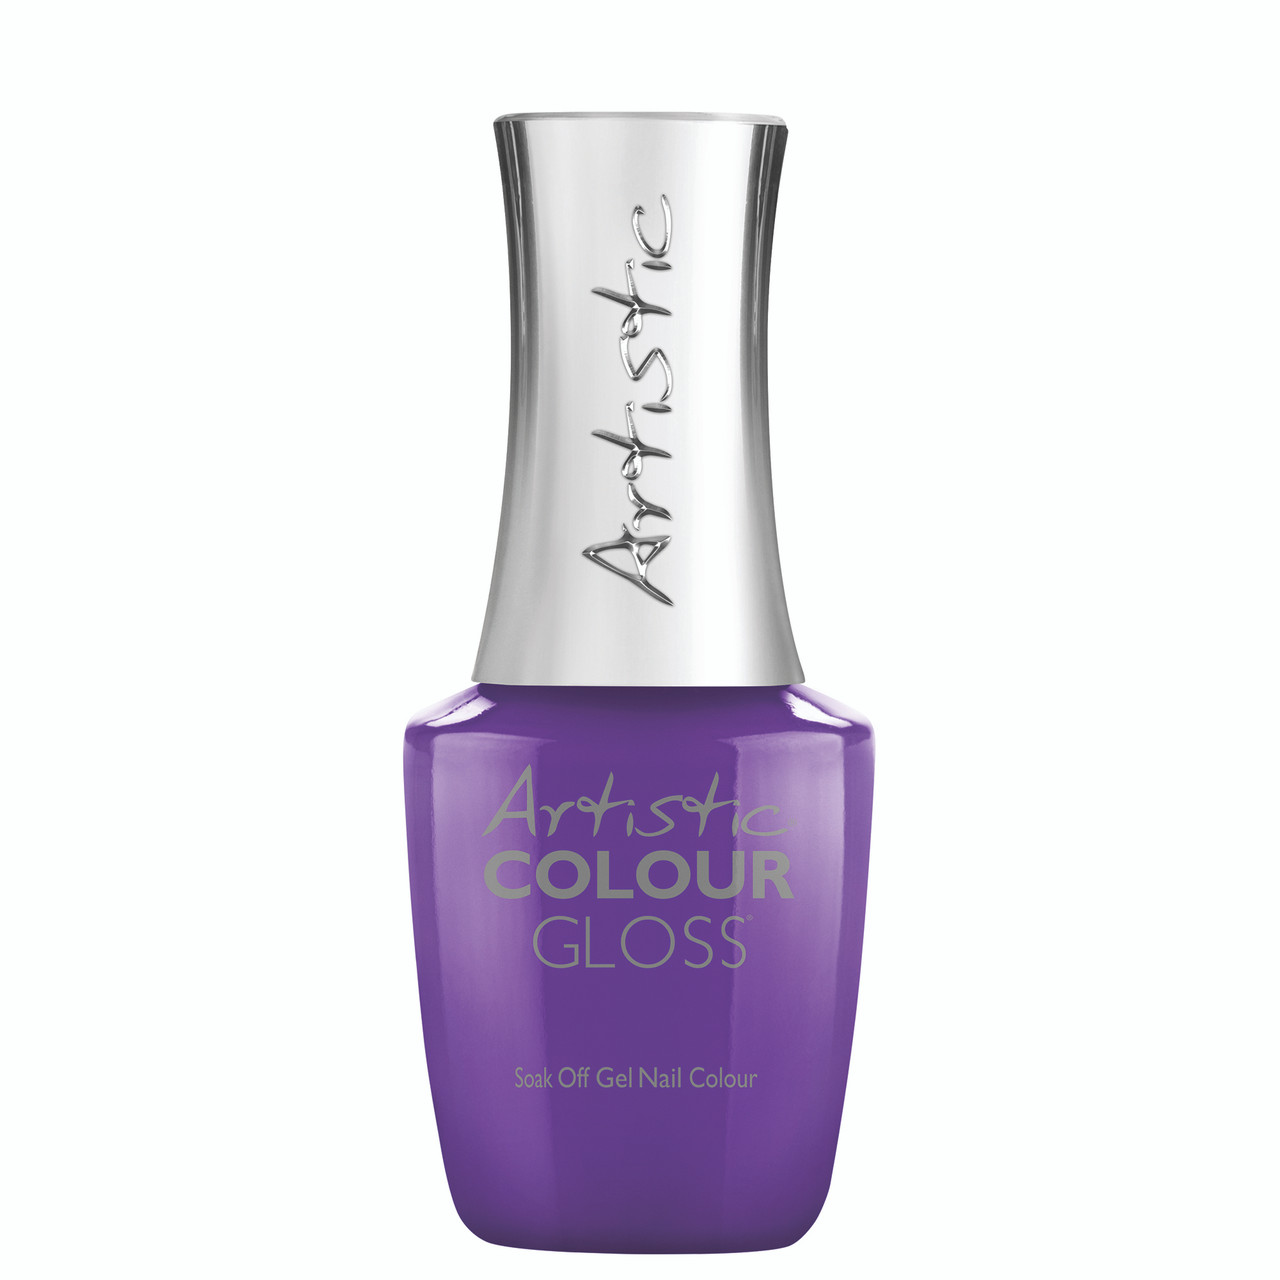 Artistic Colour Gloss – Trist (03014) – Monaco Nail Academy